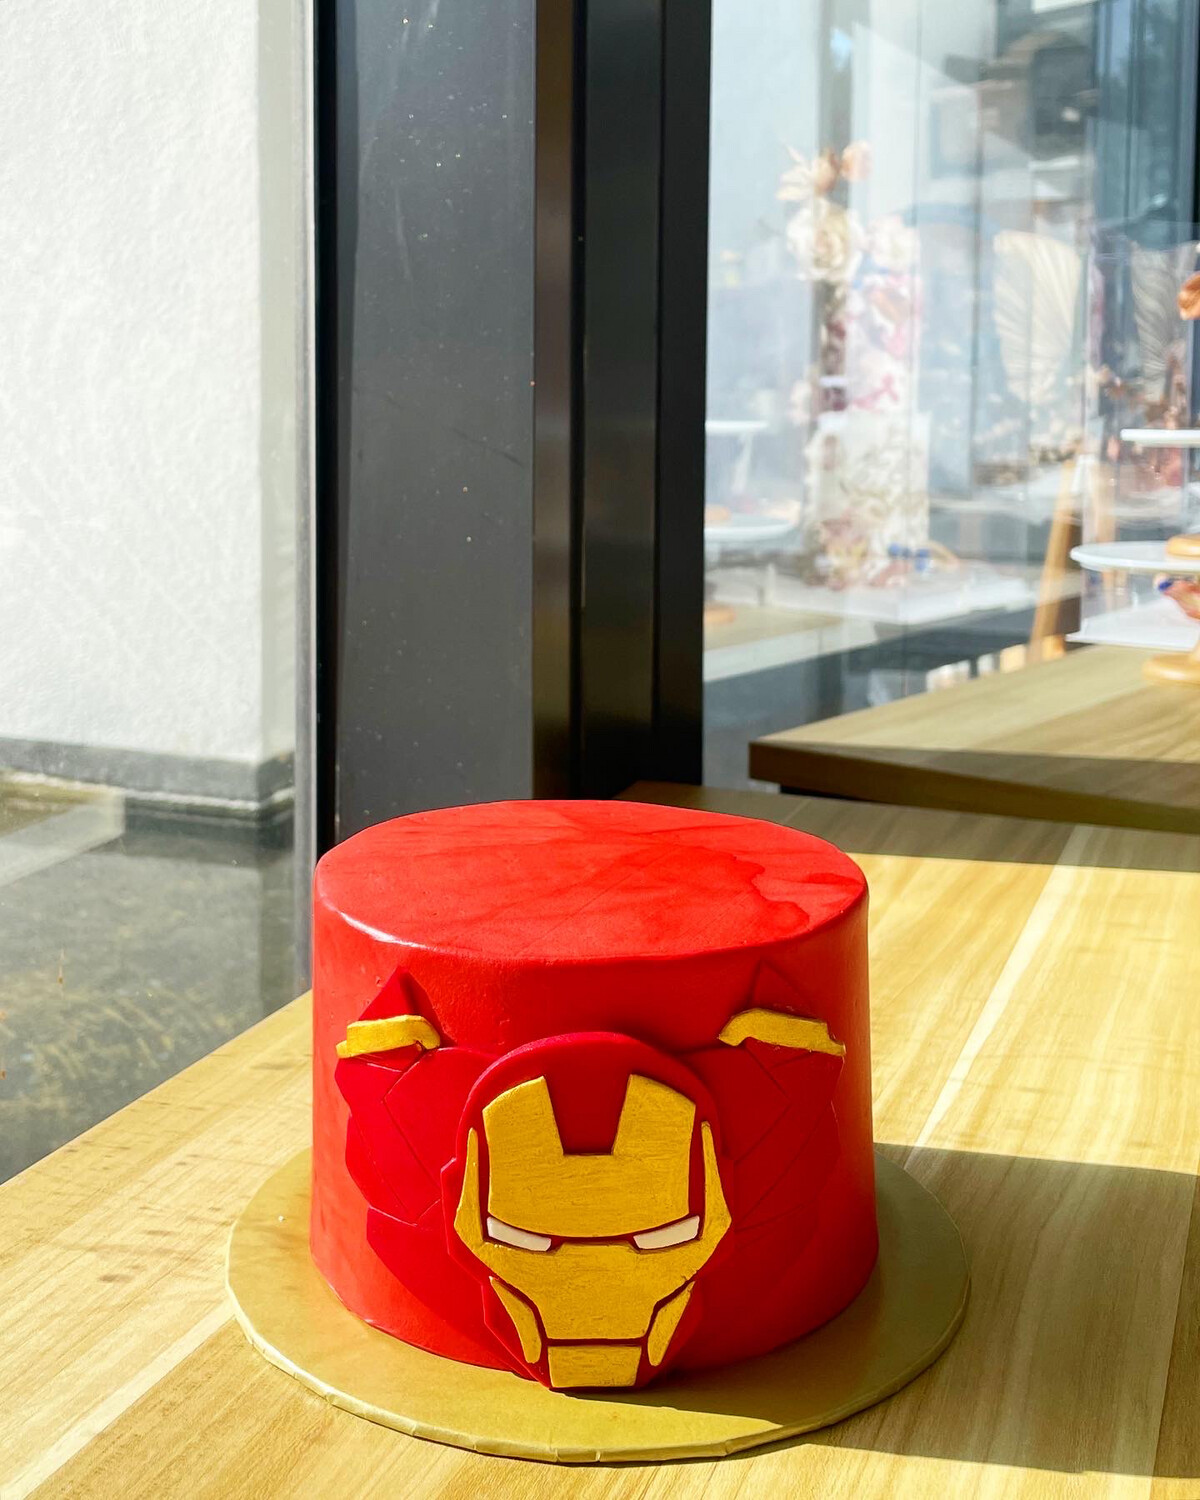 Marvel Avengers Superhero Cake 5 Iron Man